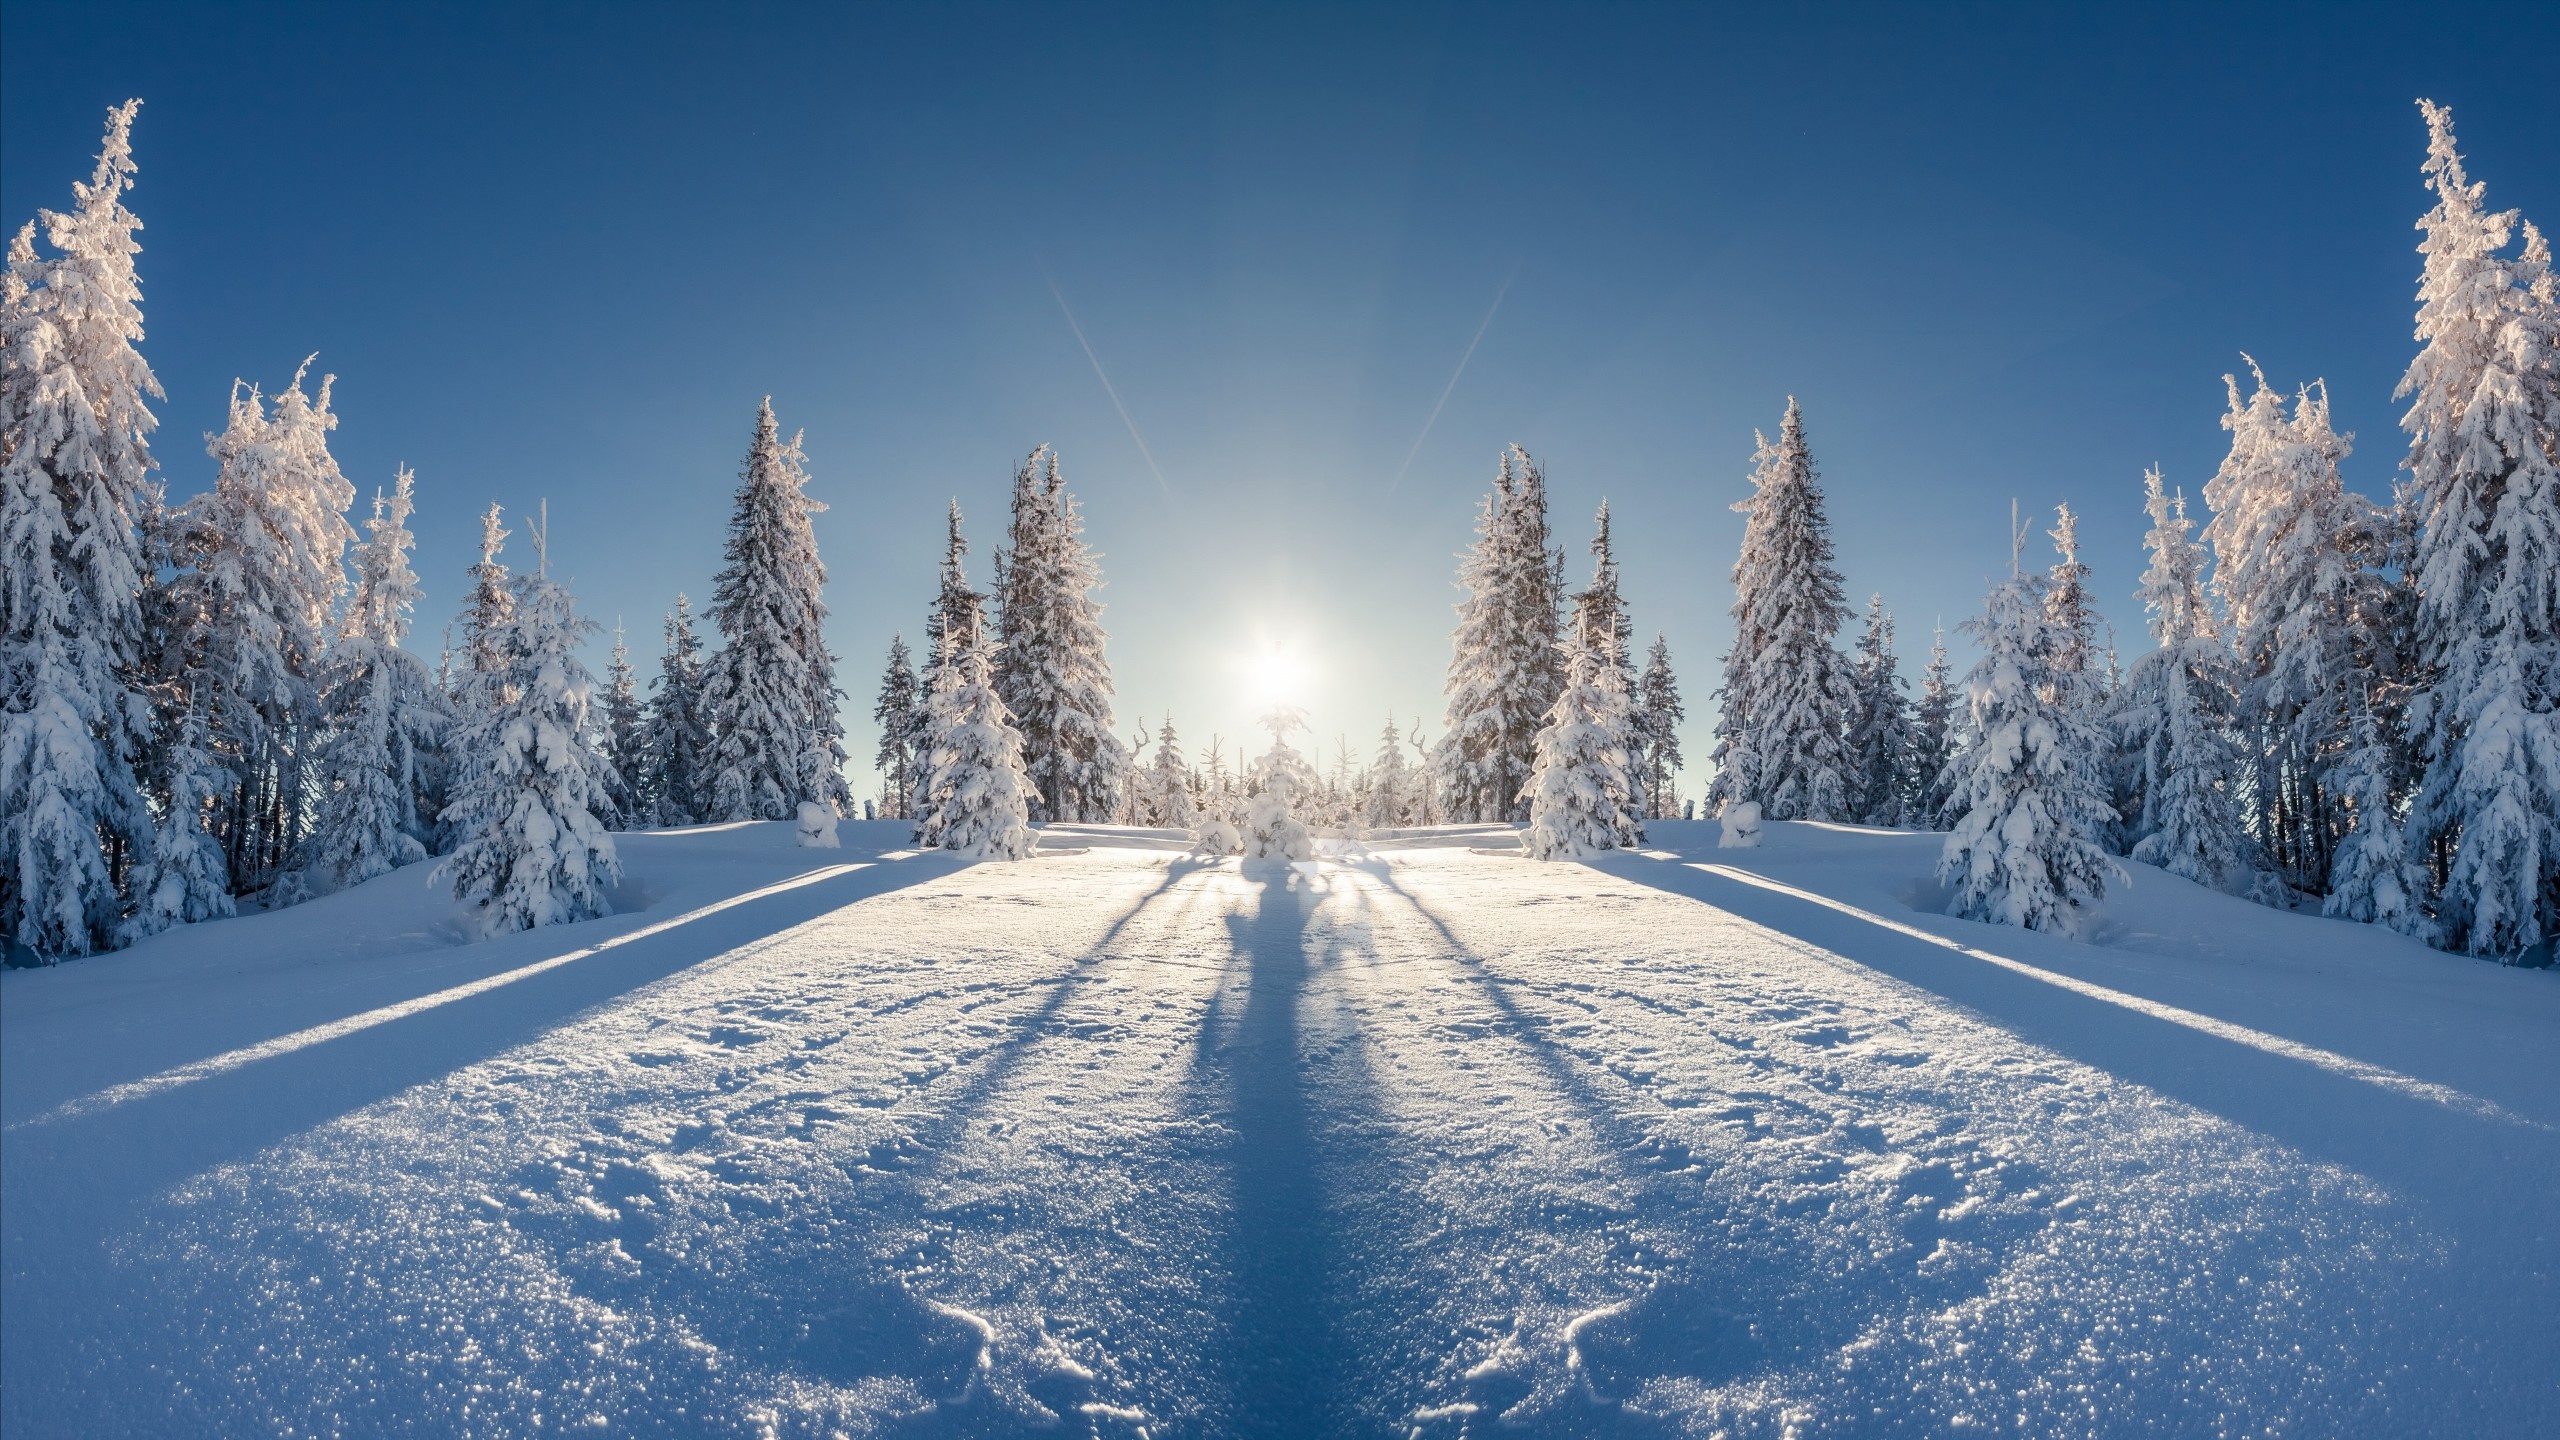 Snow, Winter forest wallpaper, Snowy trees, Nature's winter beauty, 2560x1440 HD Desktop